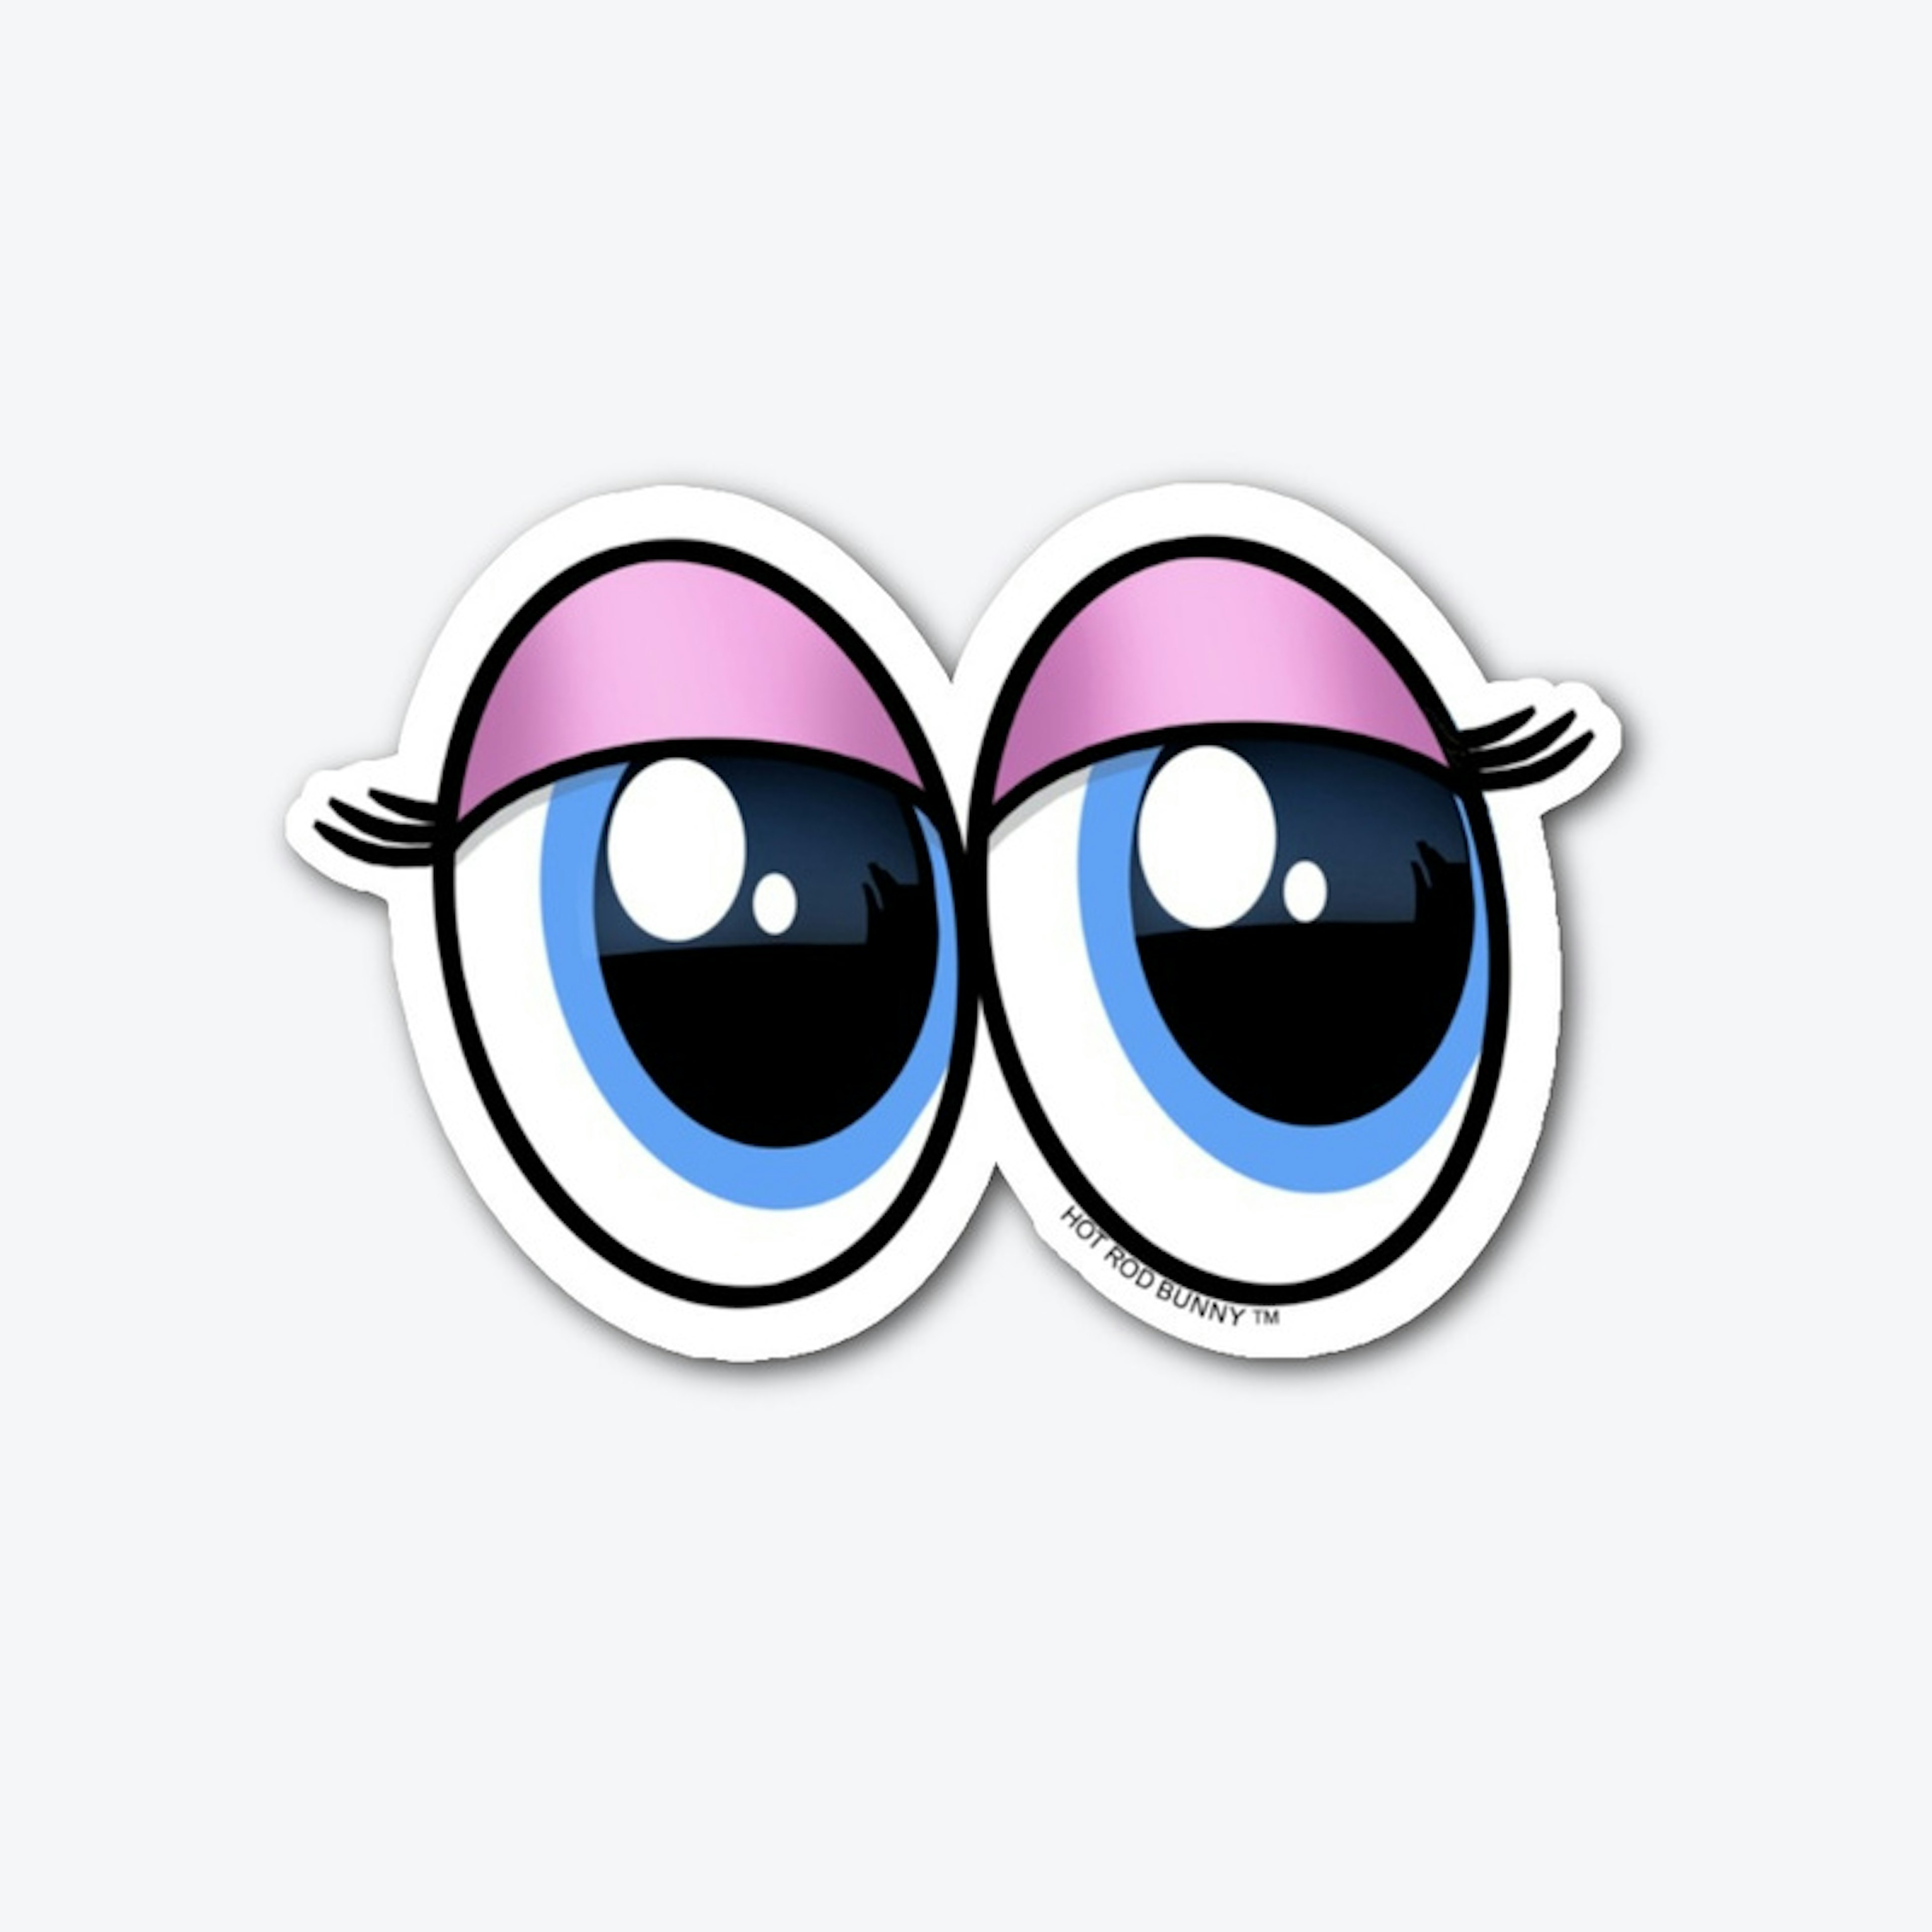 Hot Rod Bunny Beverly Moon's Eyes design